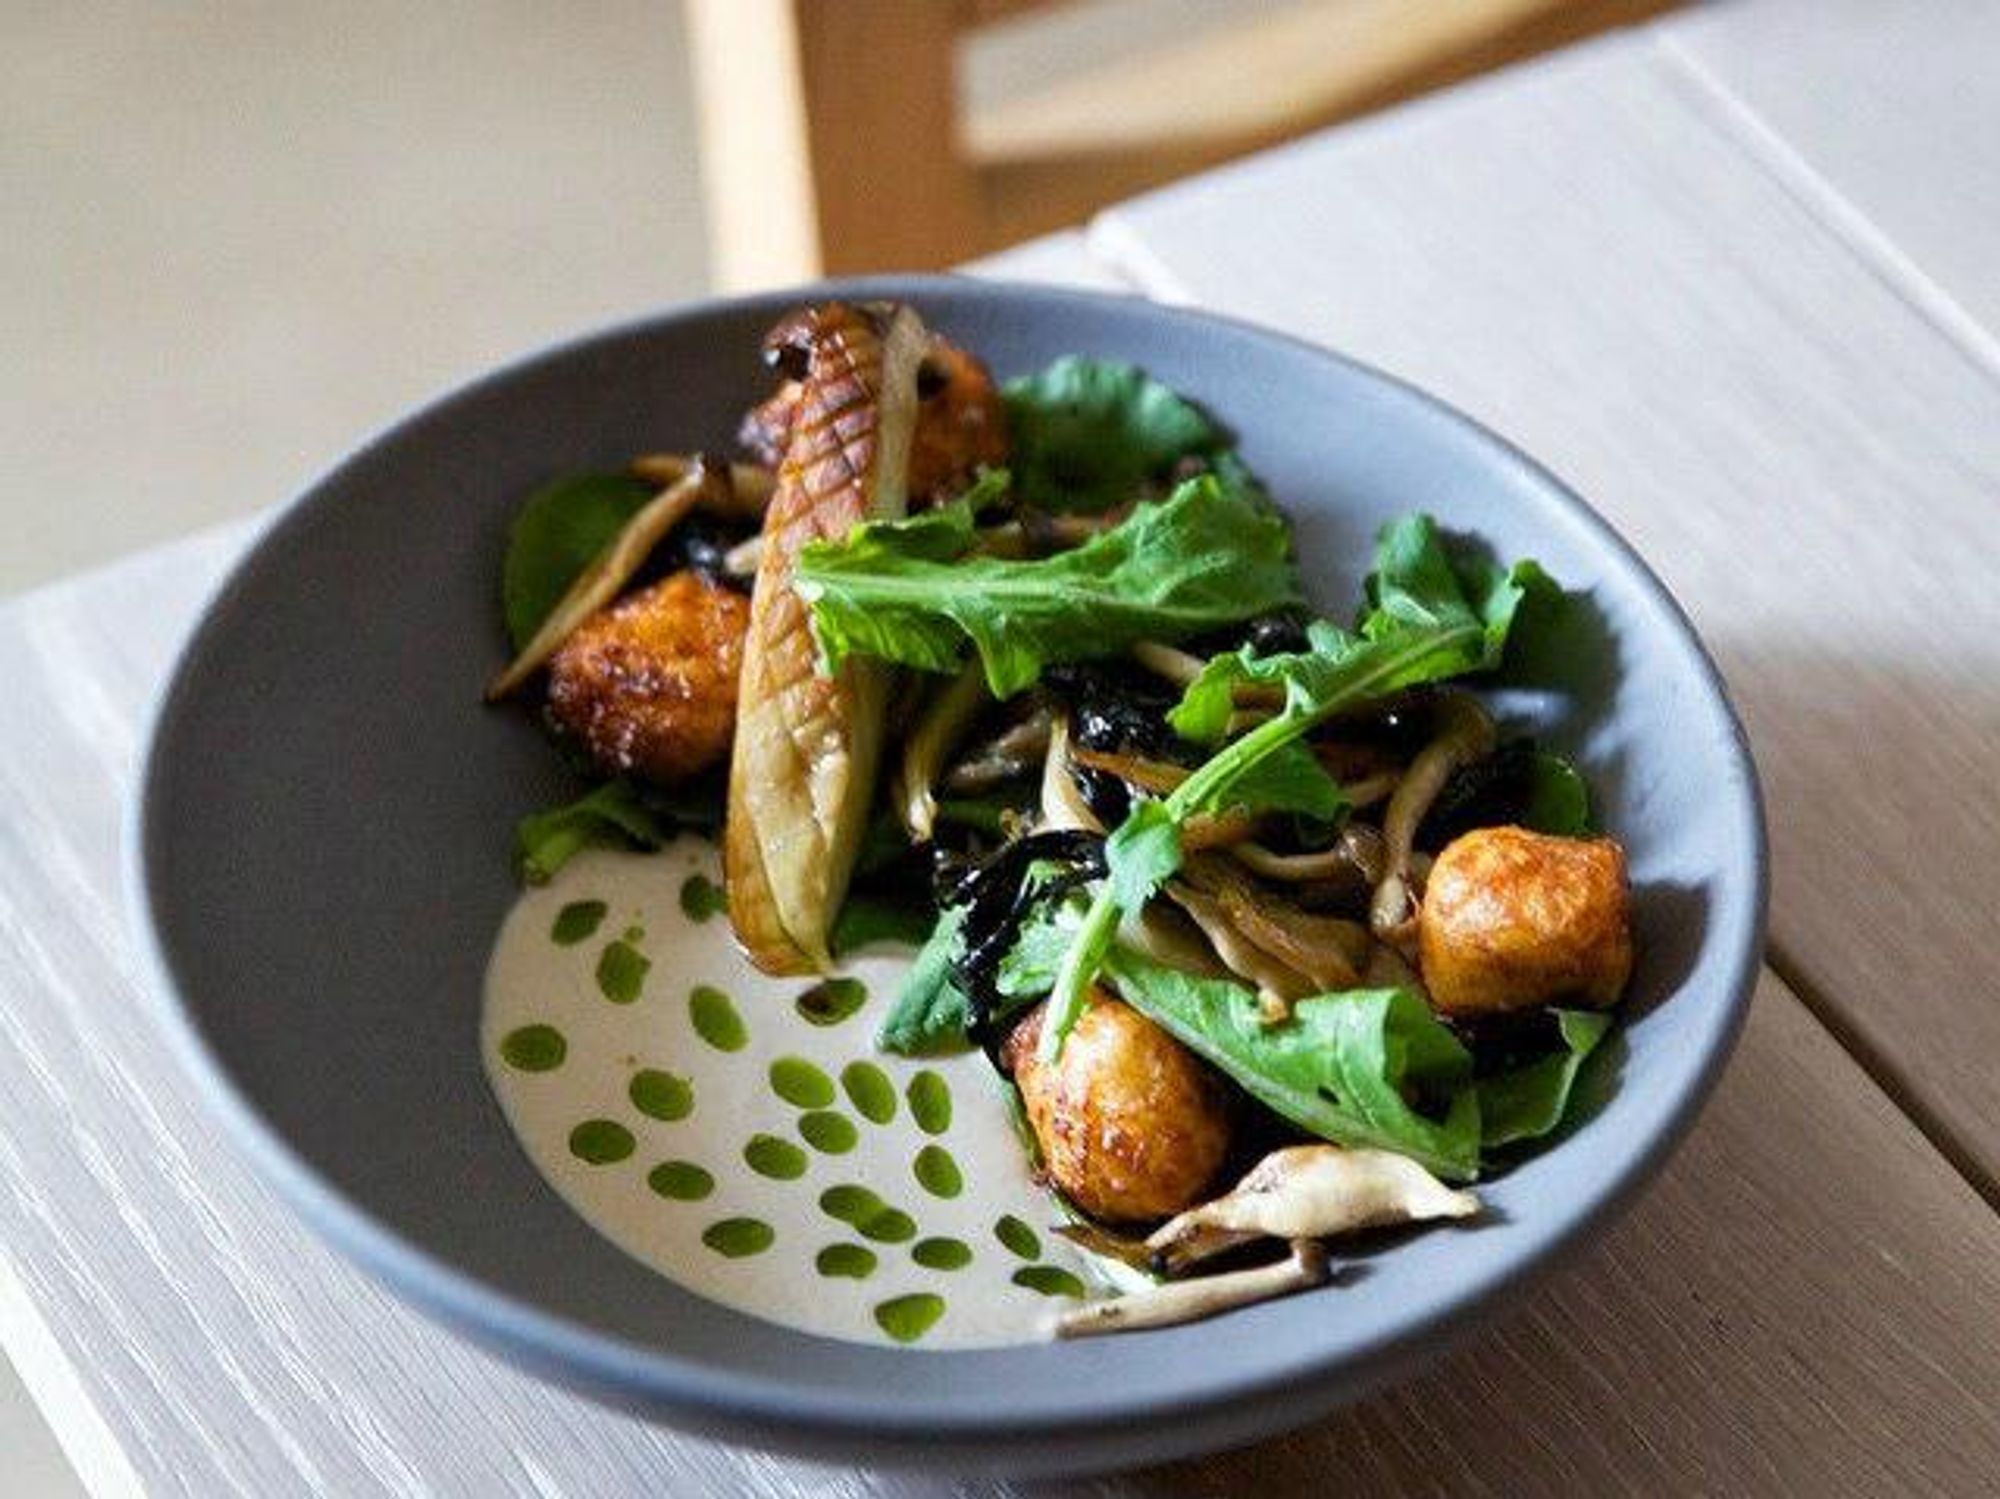 Gardner_Austin restaurant_gnuddi with mushrooms_2015